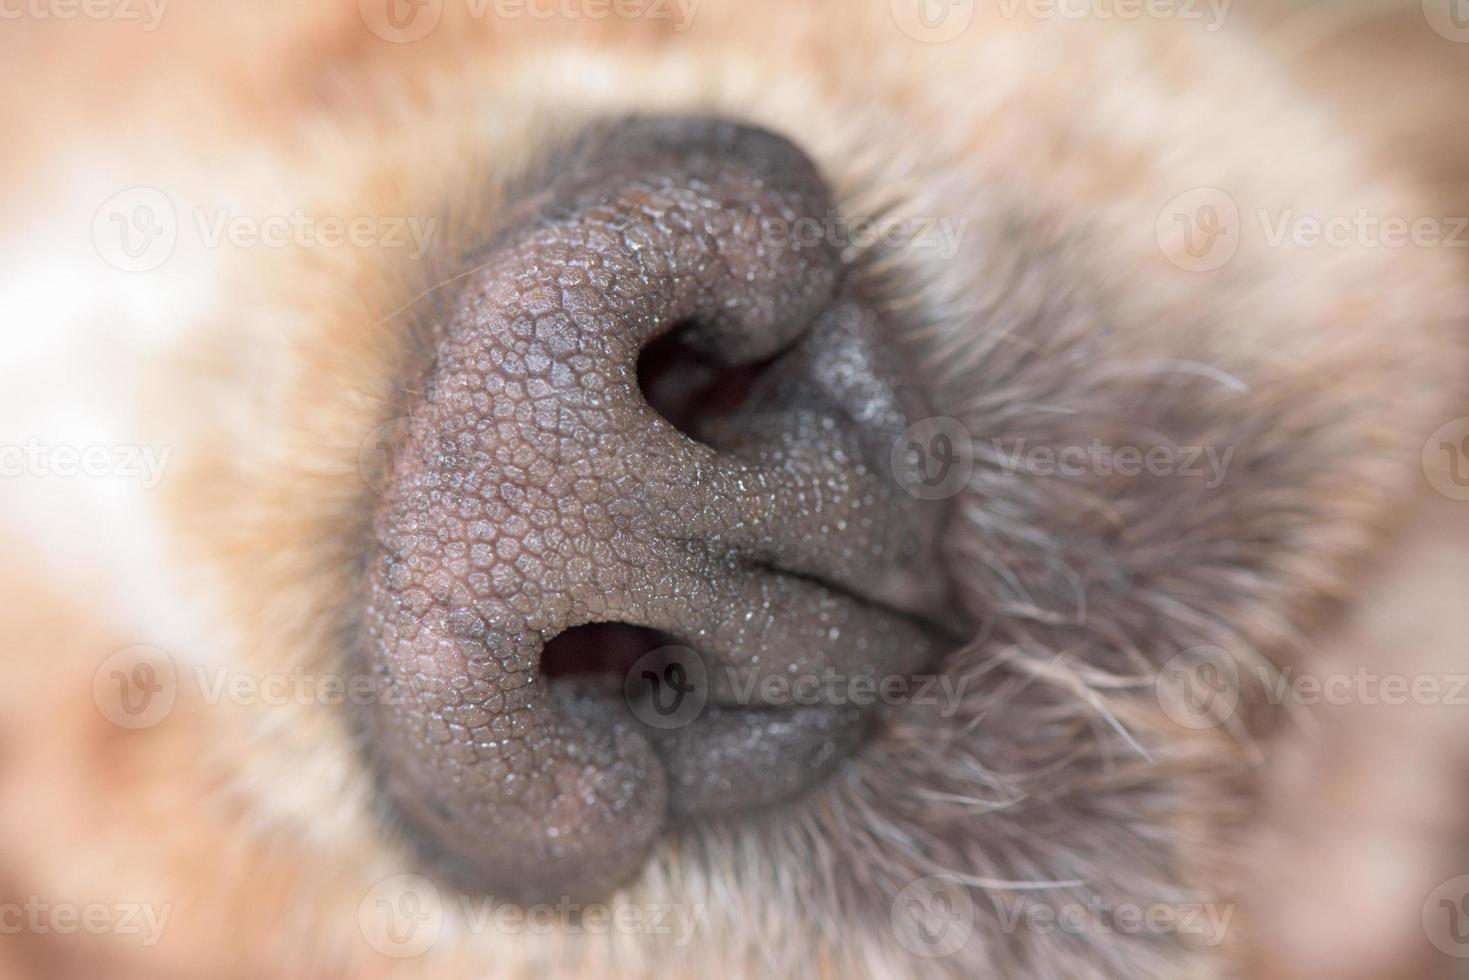 detalhe macro de nariz de cachorro close-up foto